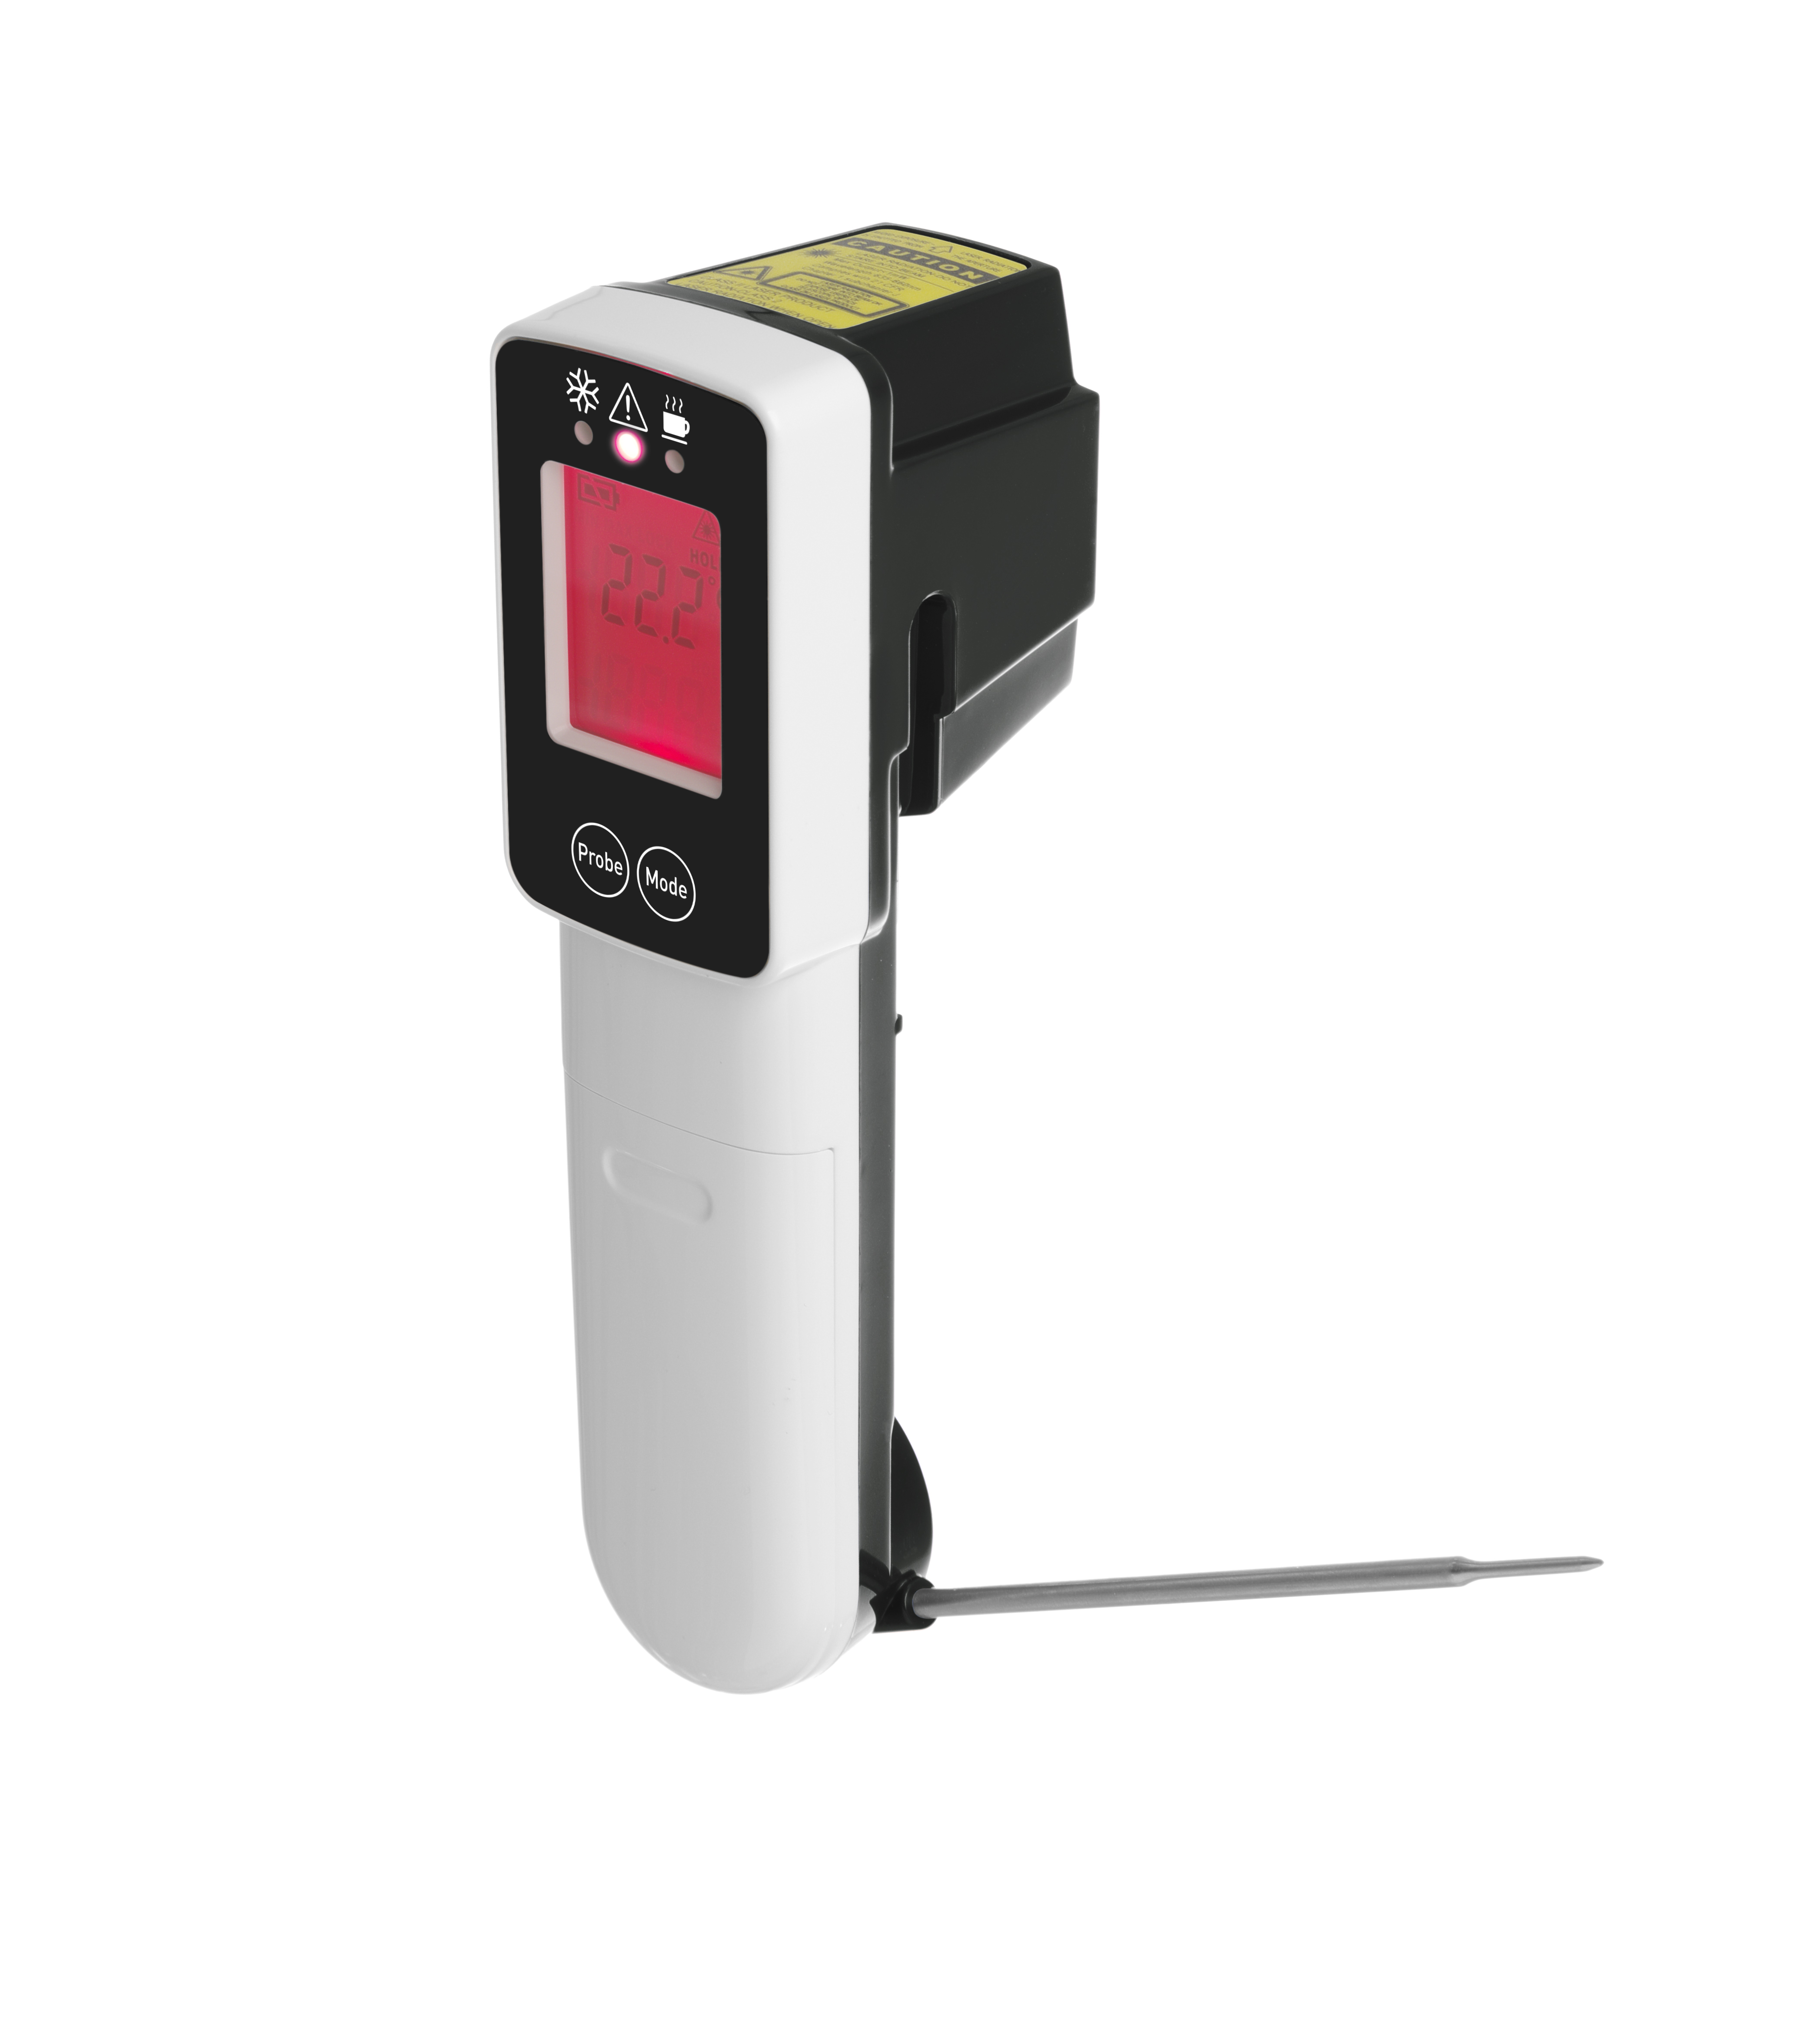 Digital-Thermometer mit Sonde 0°C -250°C, 1,5 m